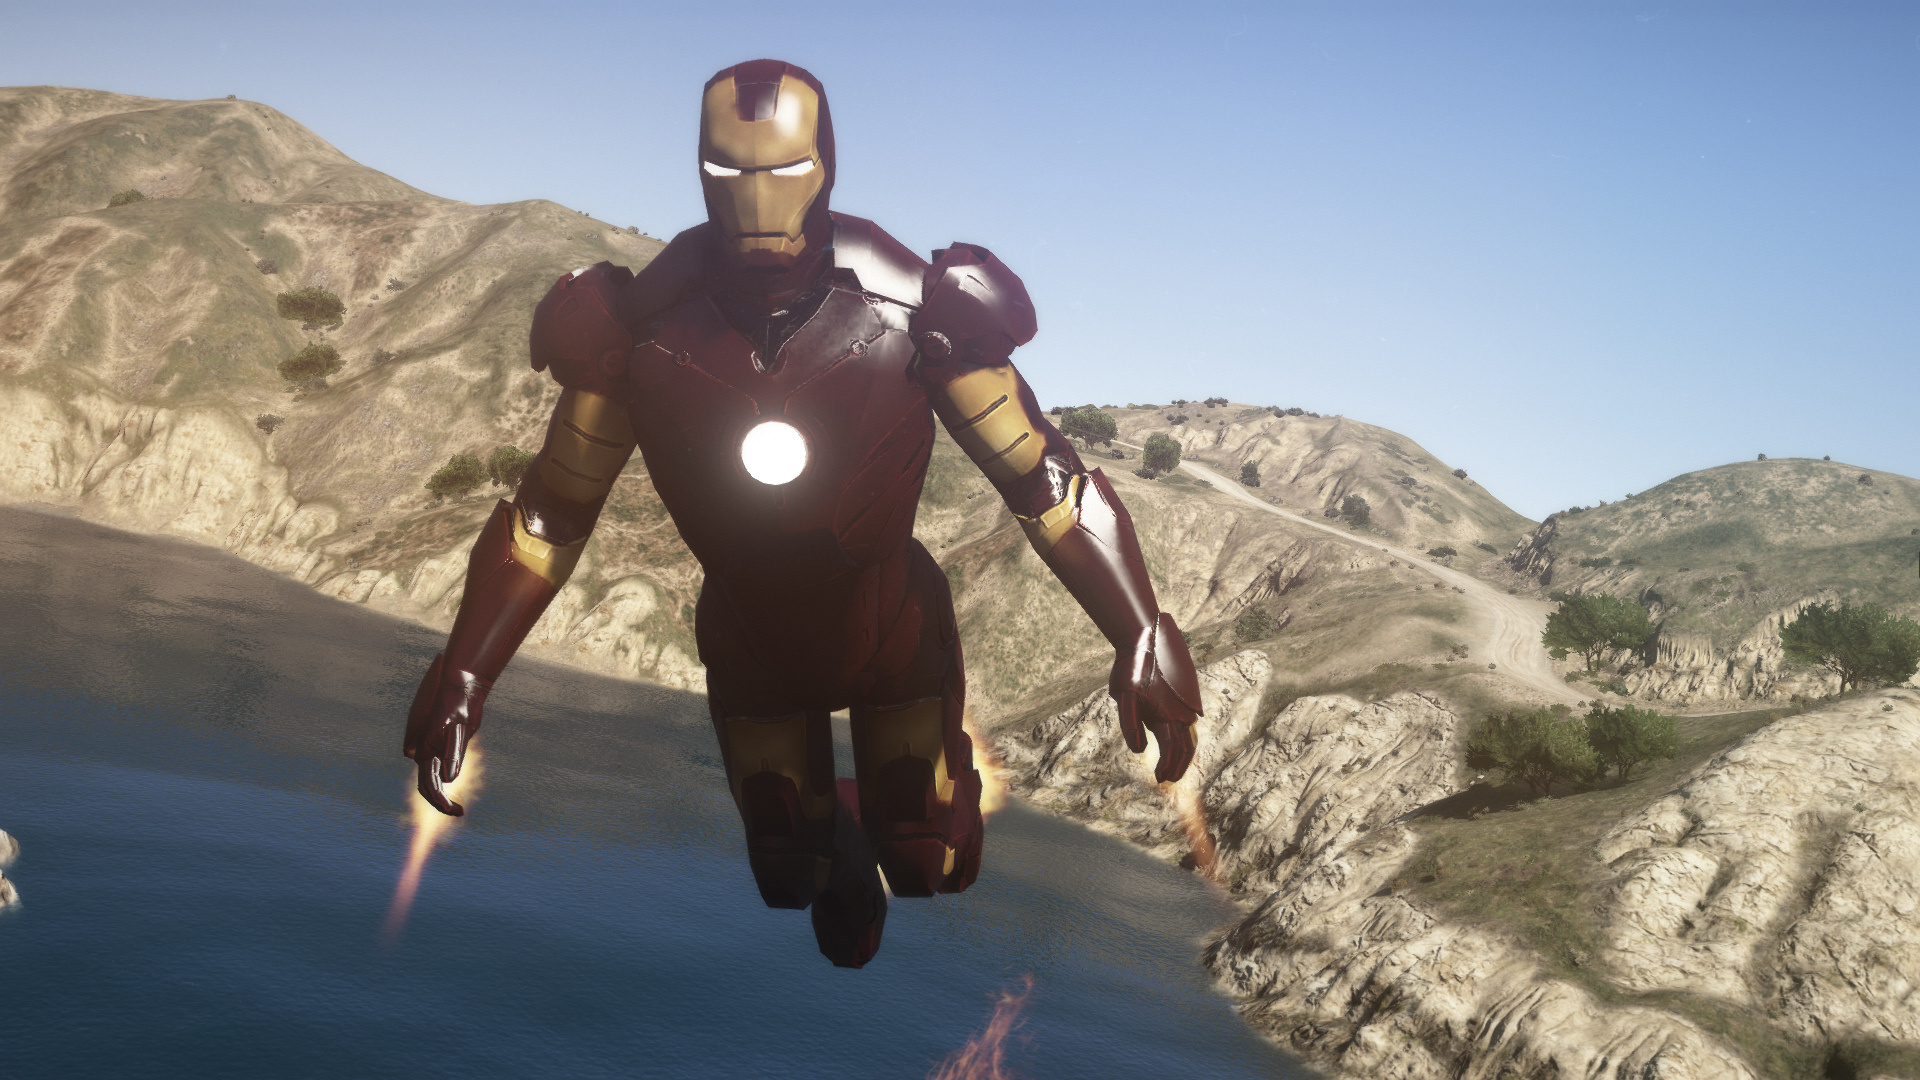 instal the last version for mac Iron Man 3